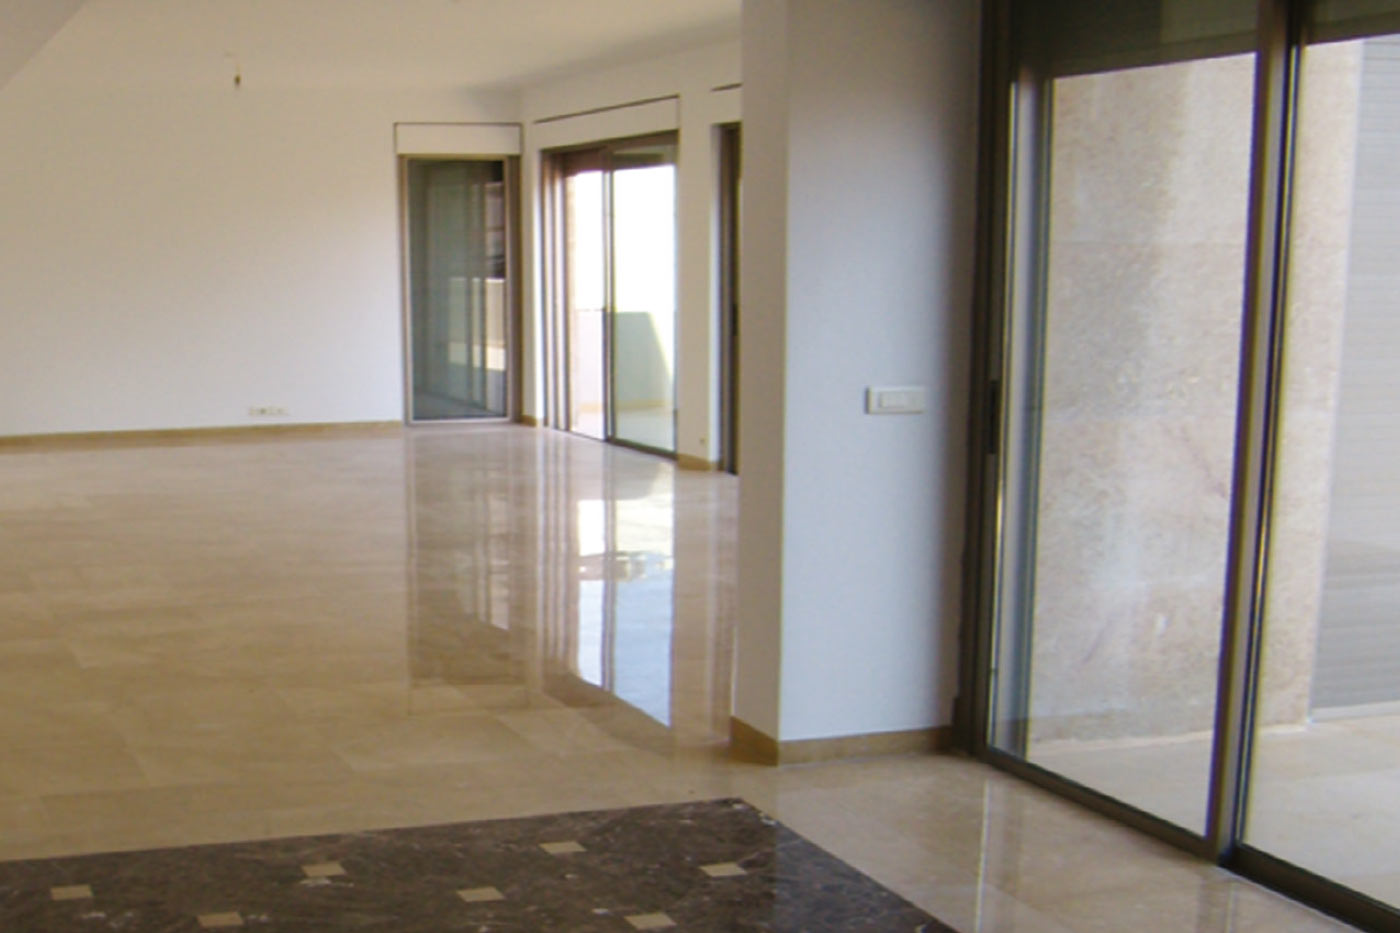 Trabaud Residence - Ground Floor with Glass Sliding Doors